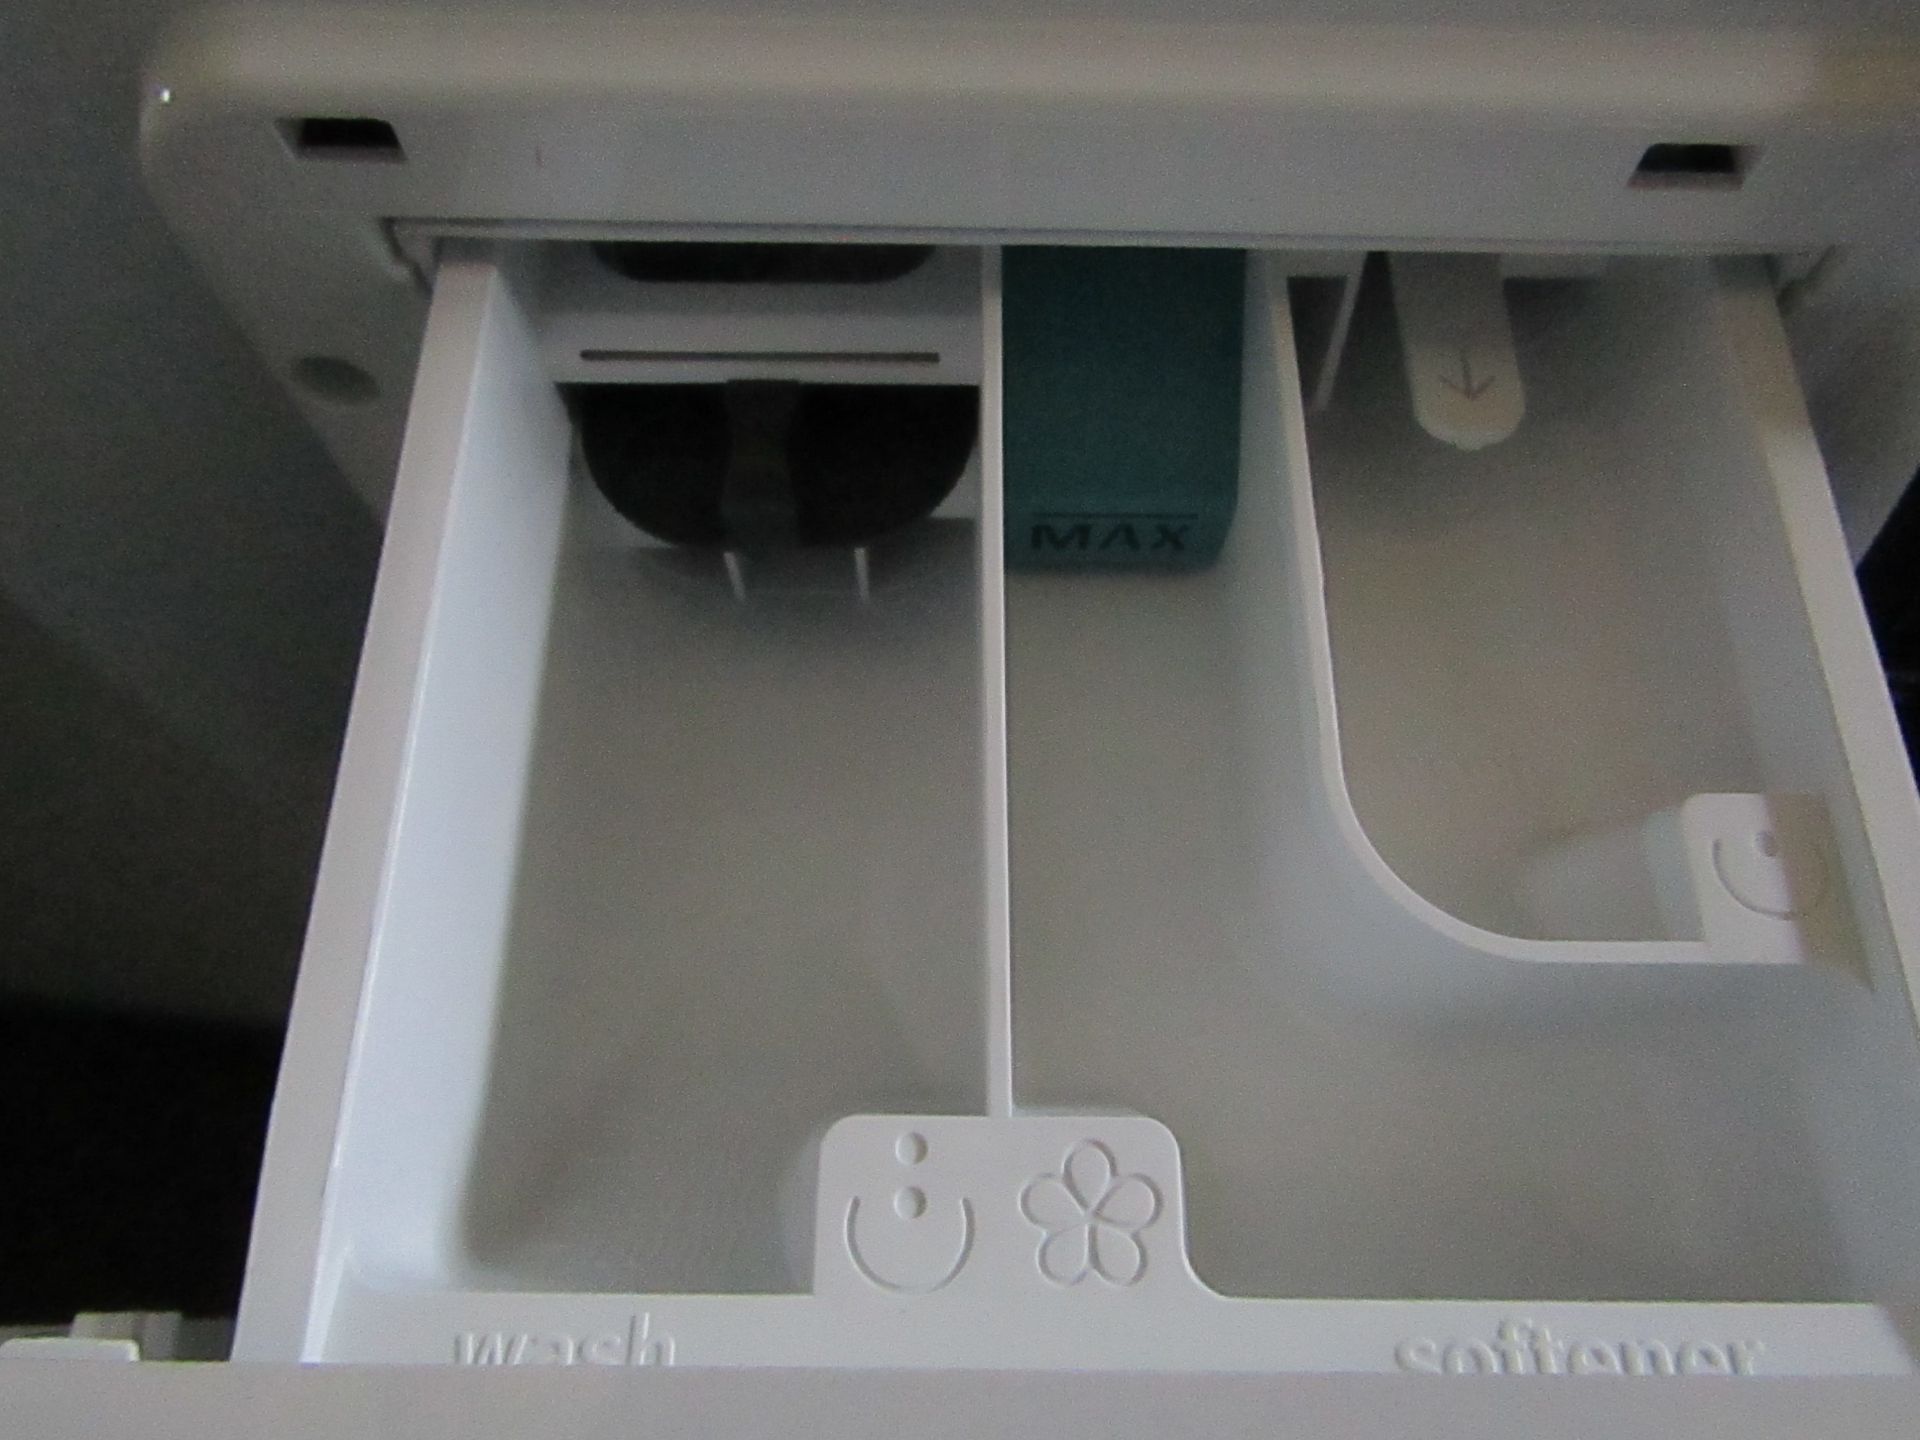 Hisense 8kg washing machine, powers on but displays error code E07 - Image 2 of 2